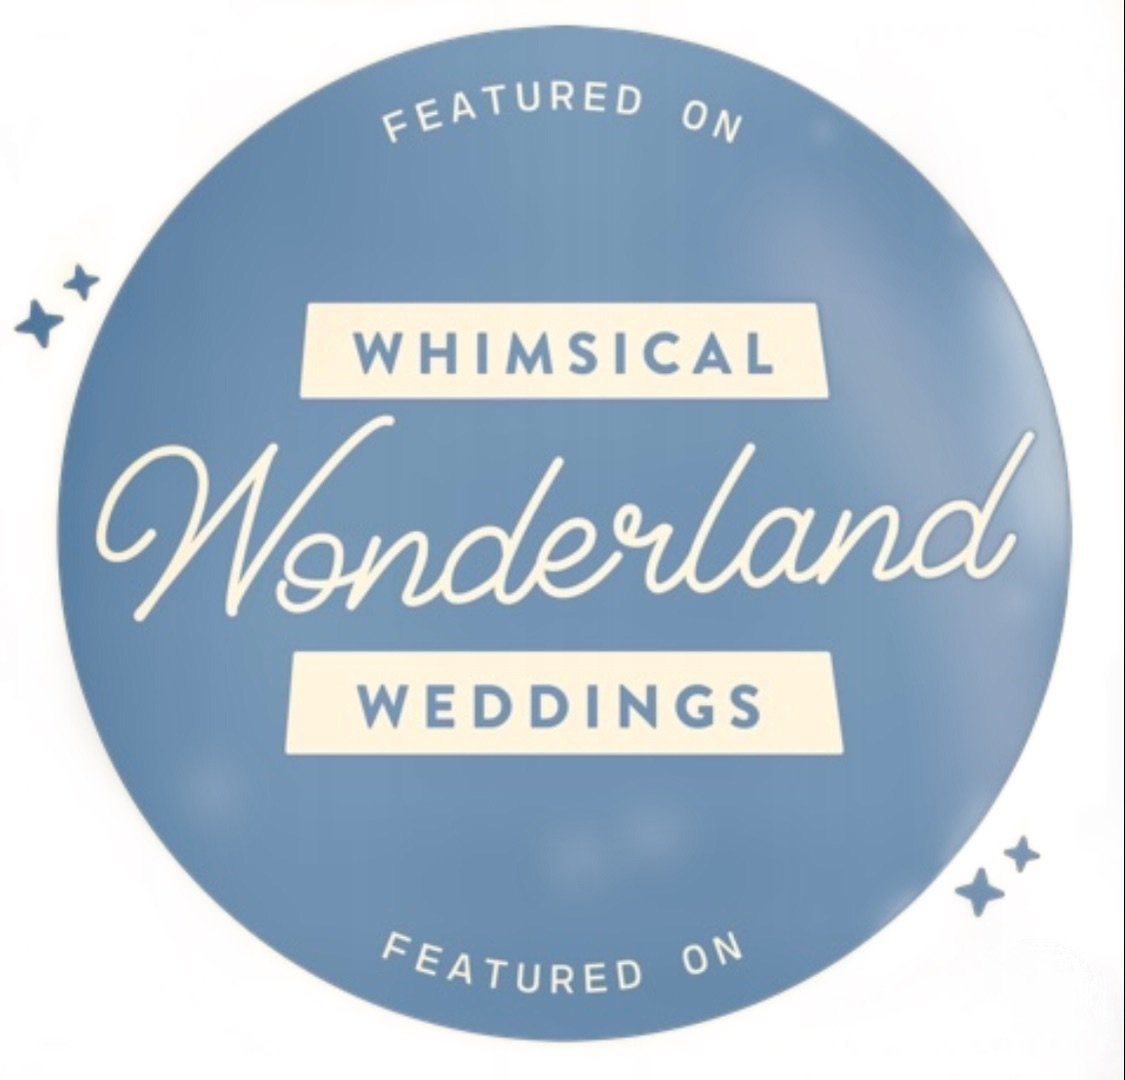 Whimsical Wonderland Weddings - Featured in November 2021